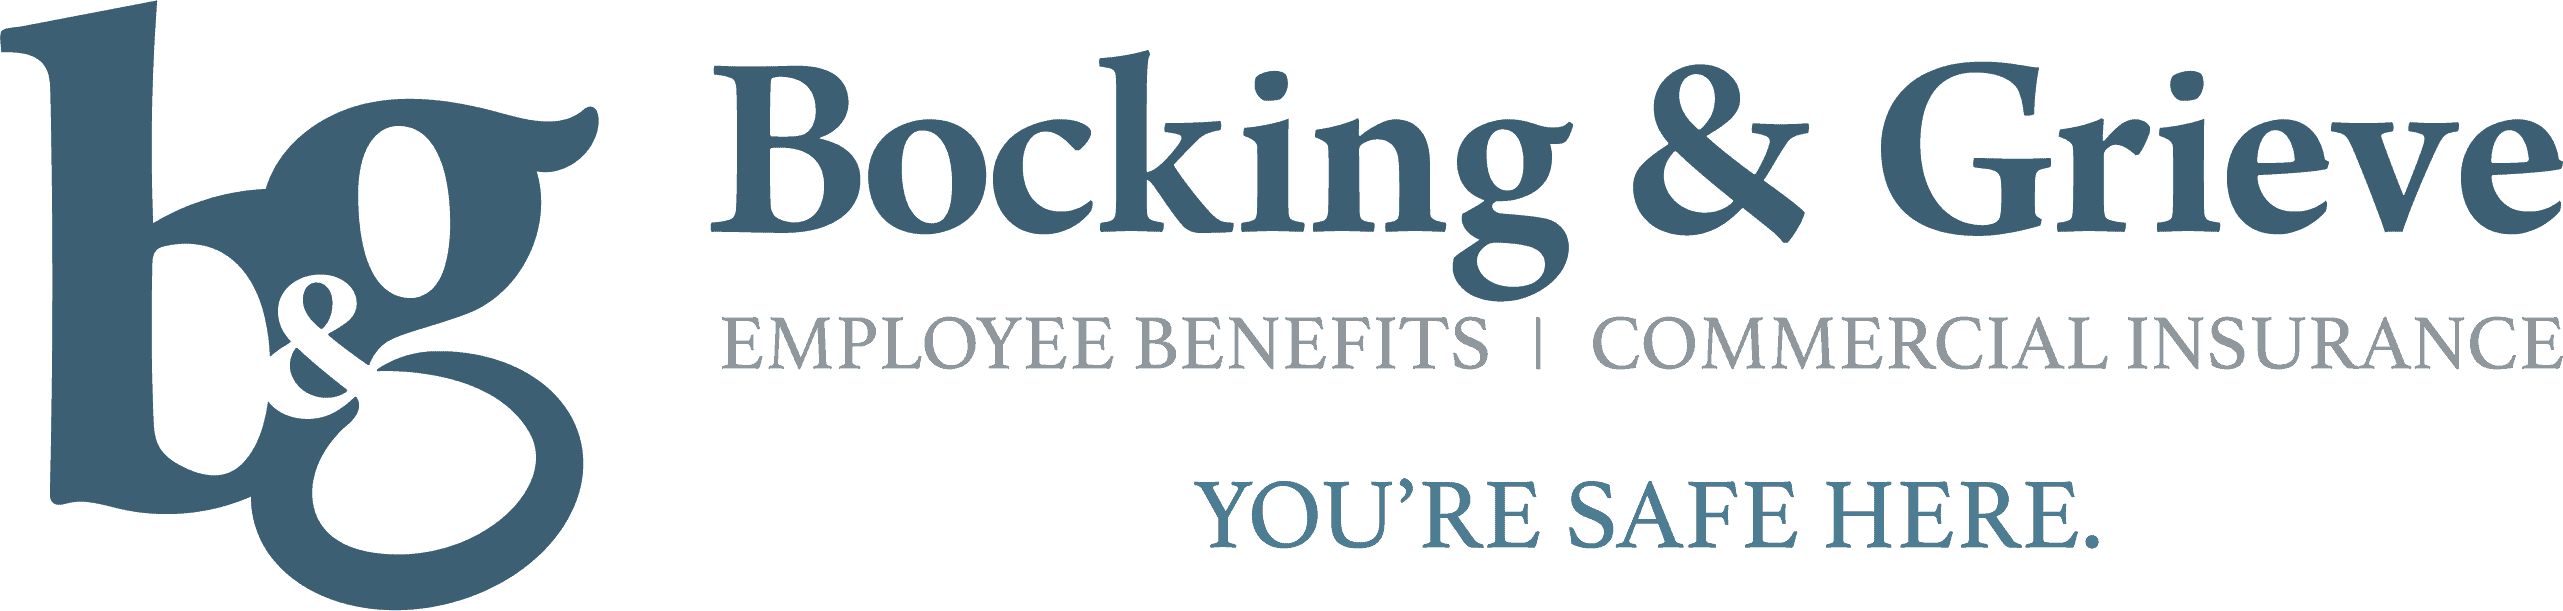 Bocking & Grieve Logo